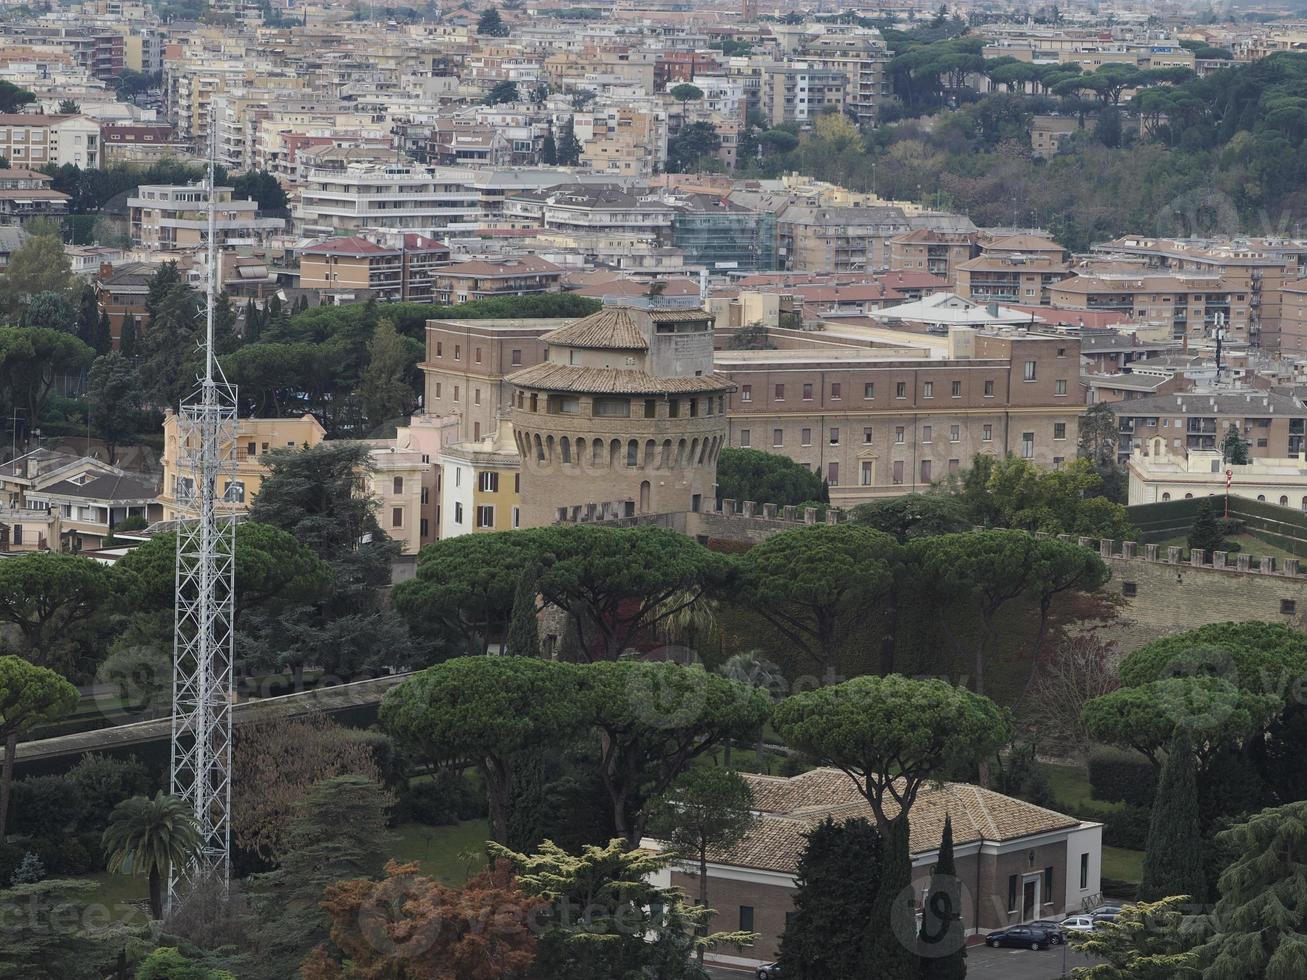 heilige peter basiliek Rome visie van op het dak foto